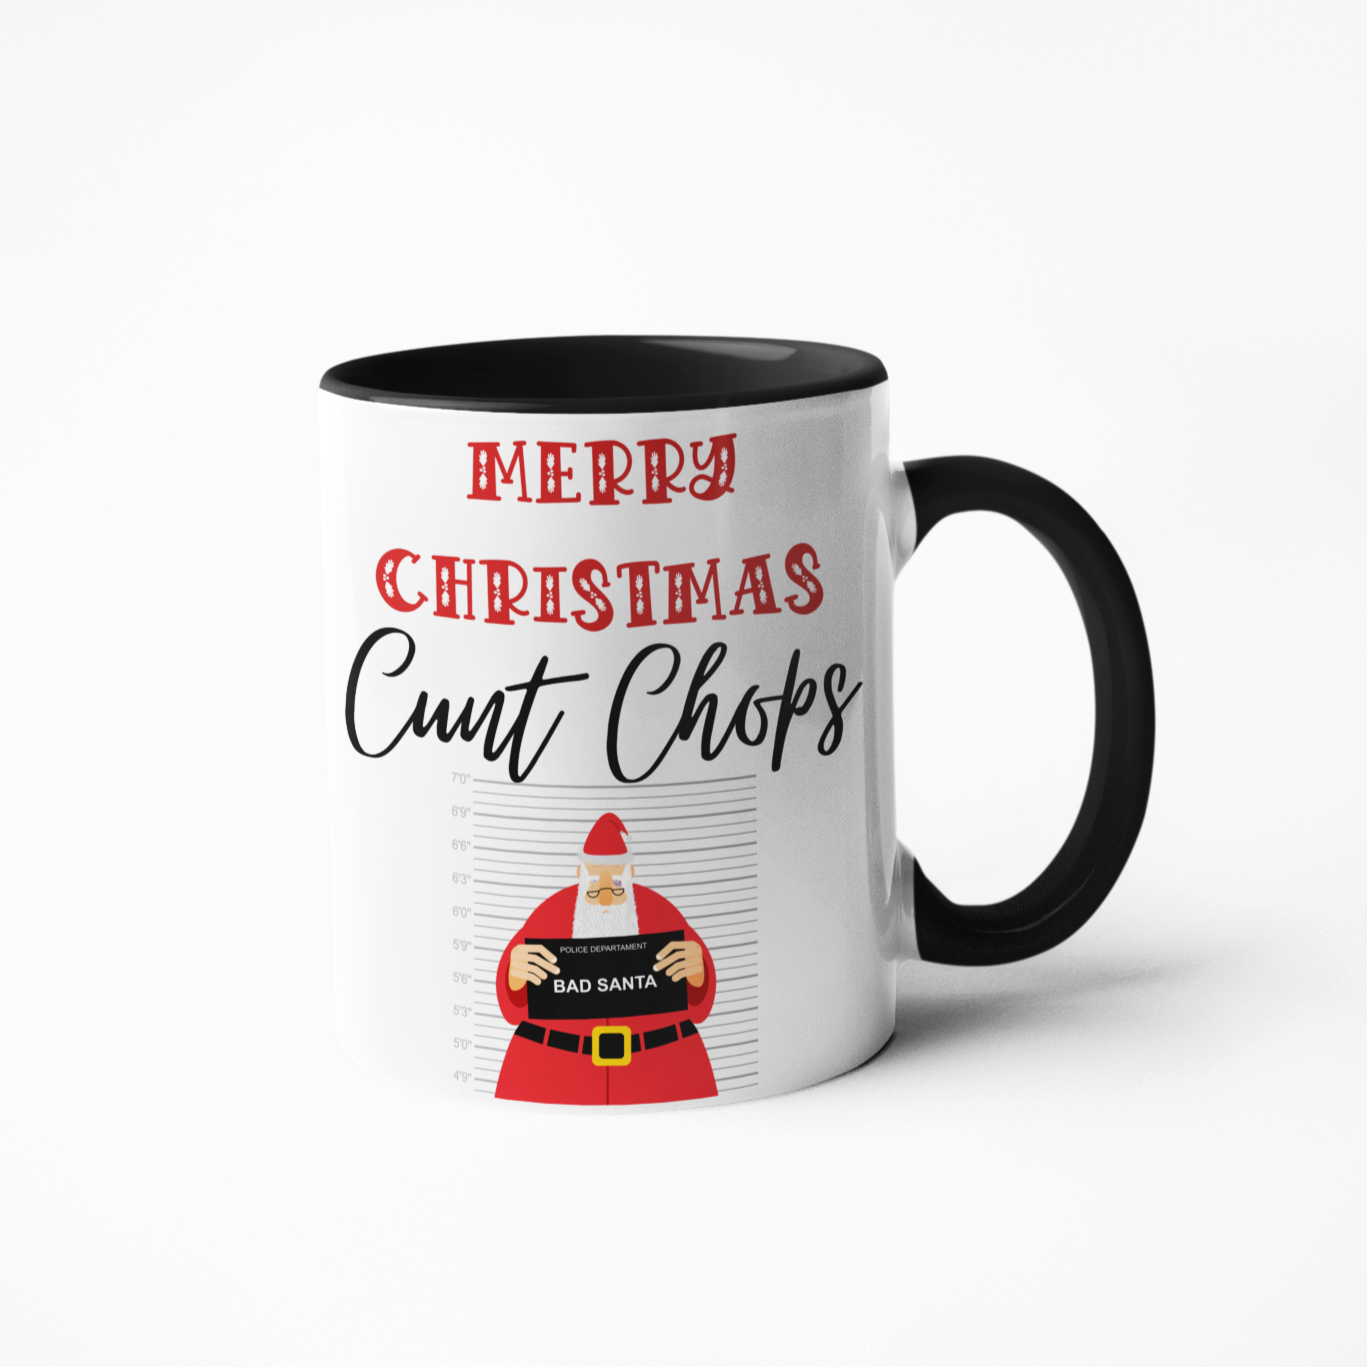 Merry Christmas cunt chops black mug